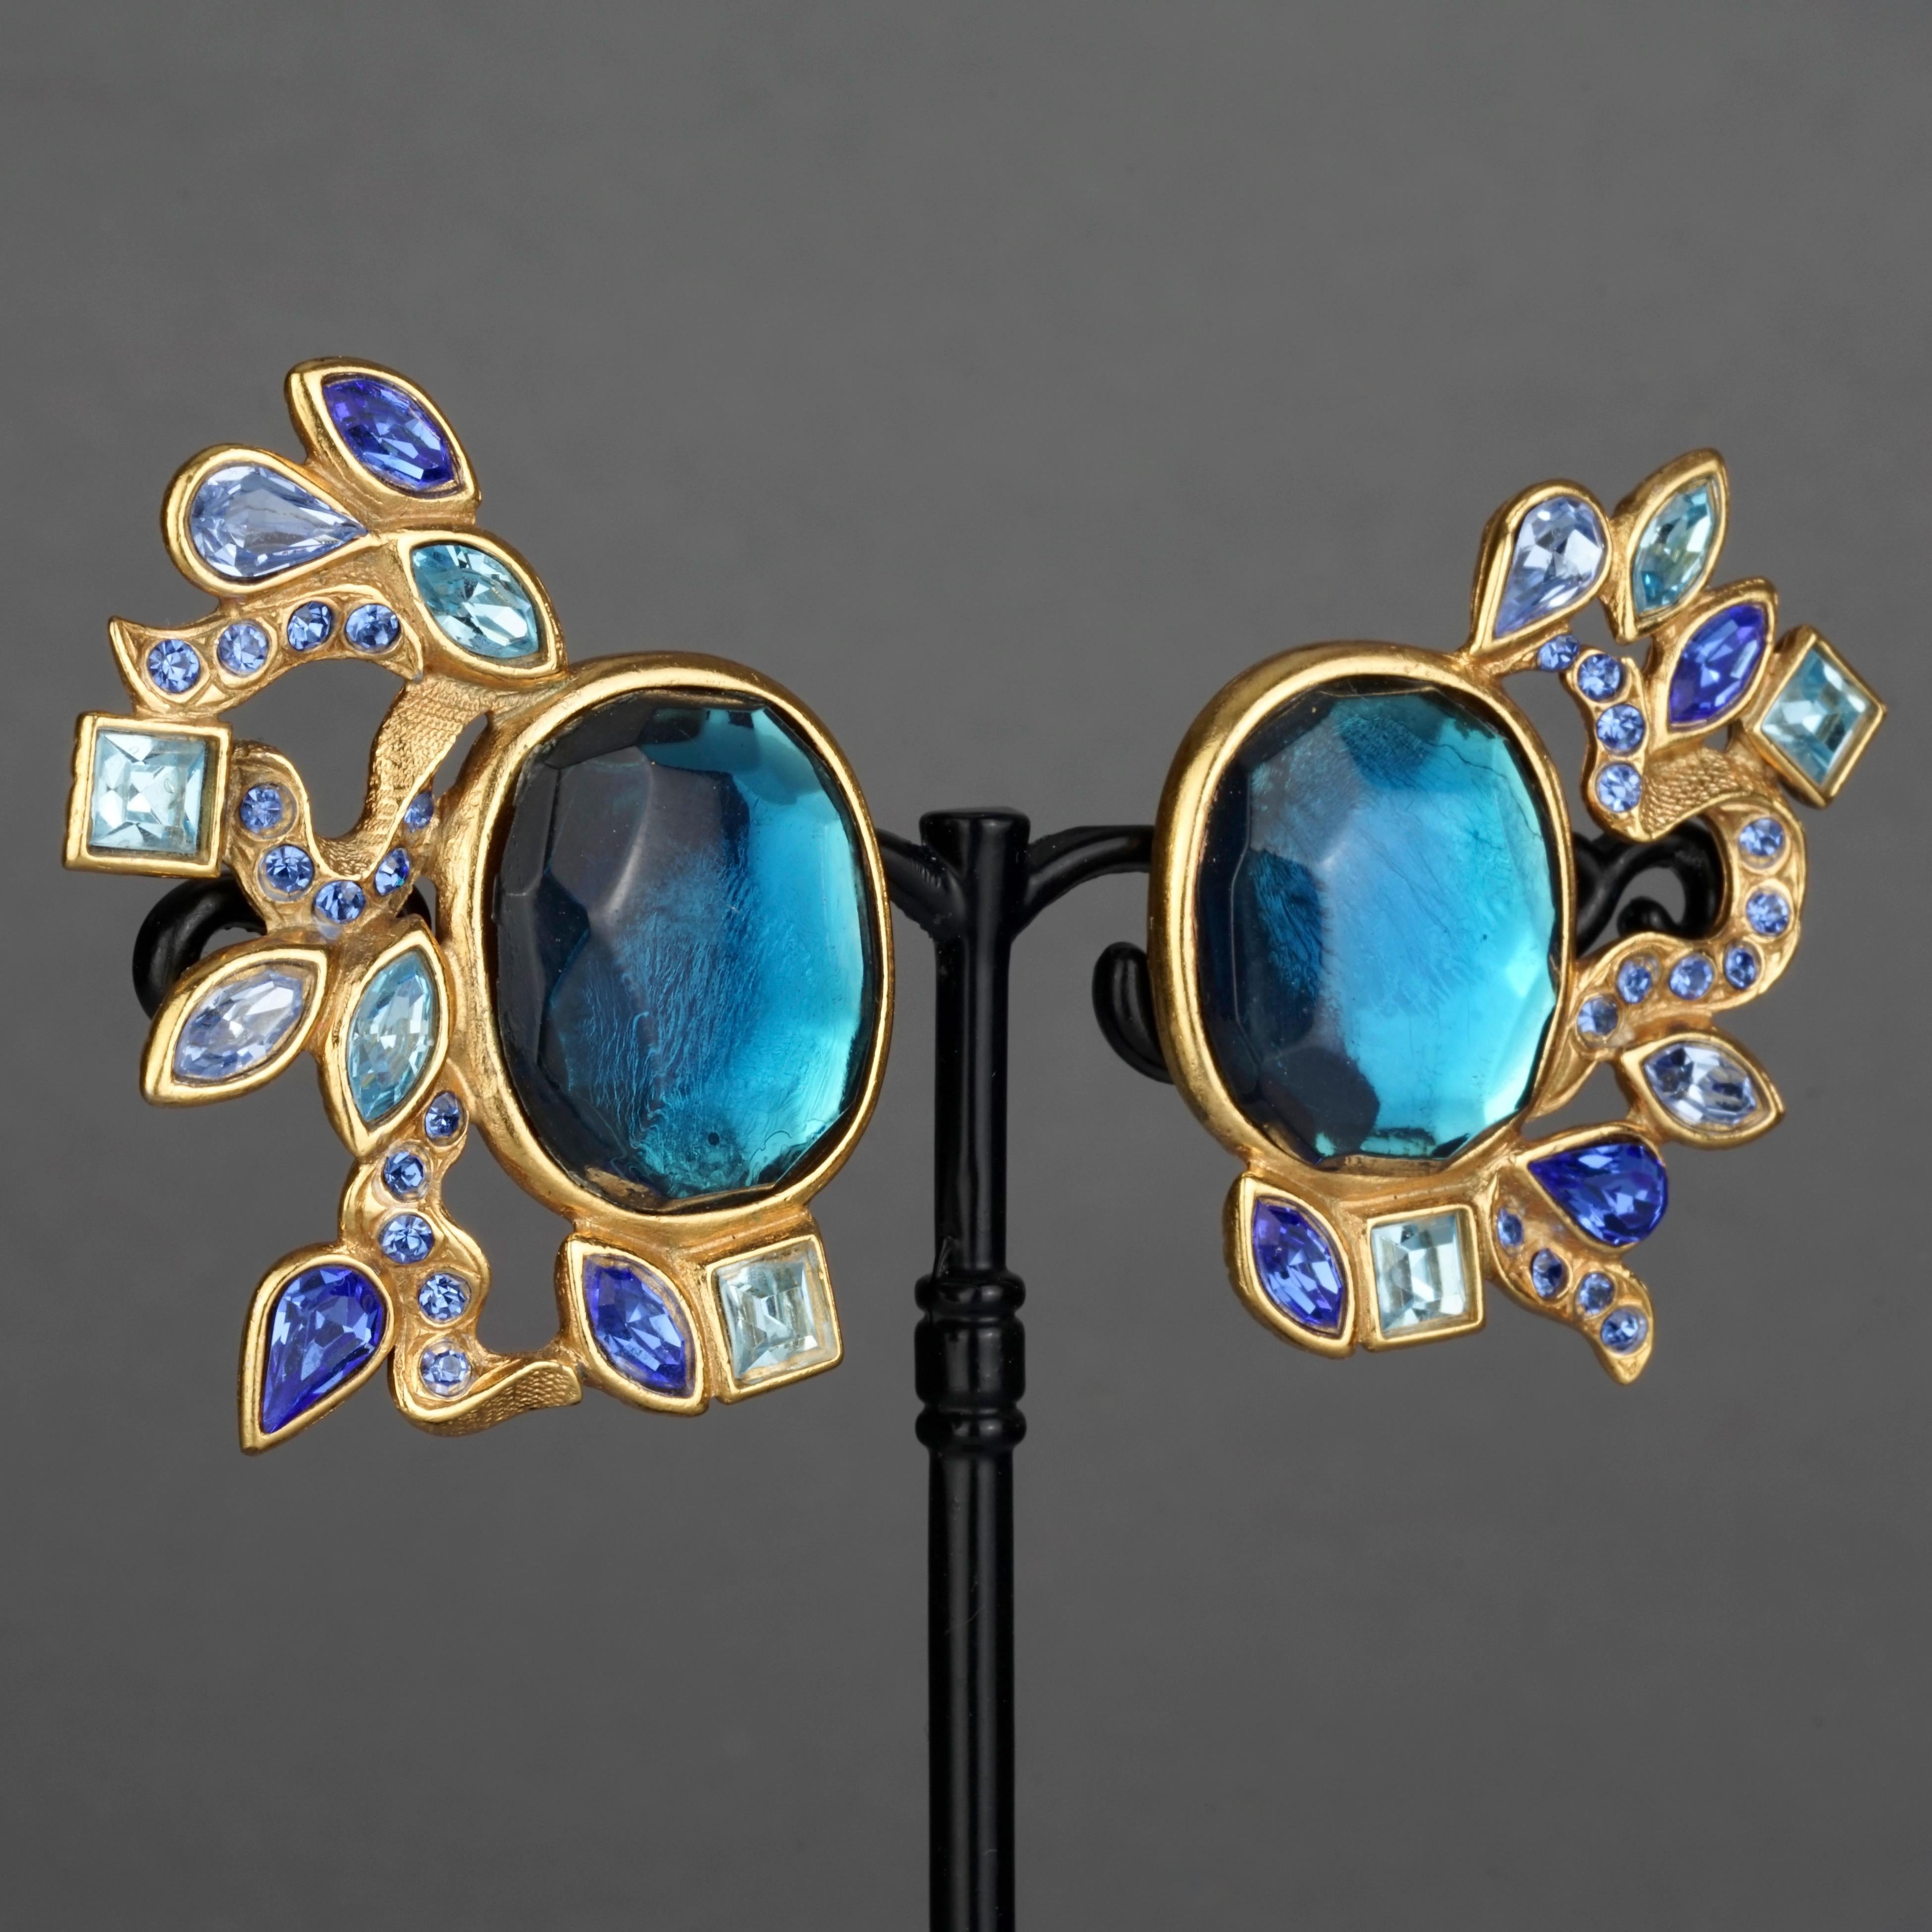 Vintage YVES SAINT LAURENT Ysl by Goossens Ornate Faceted Blue Stone Earrings 1